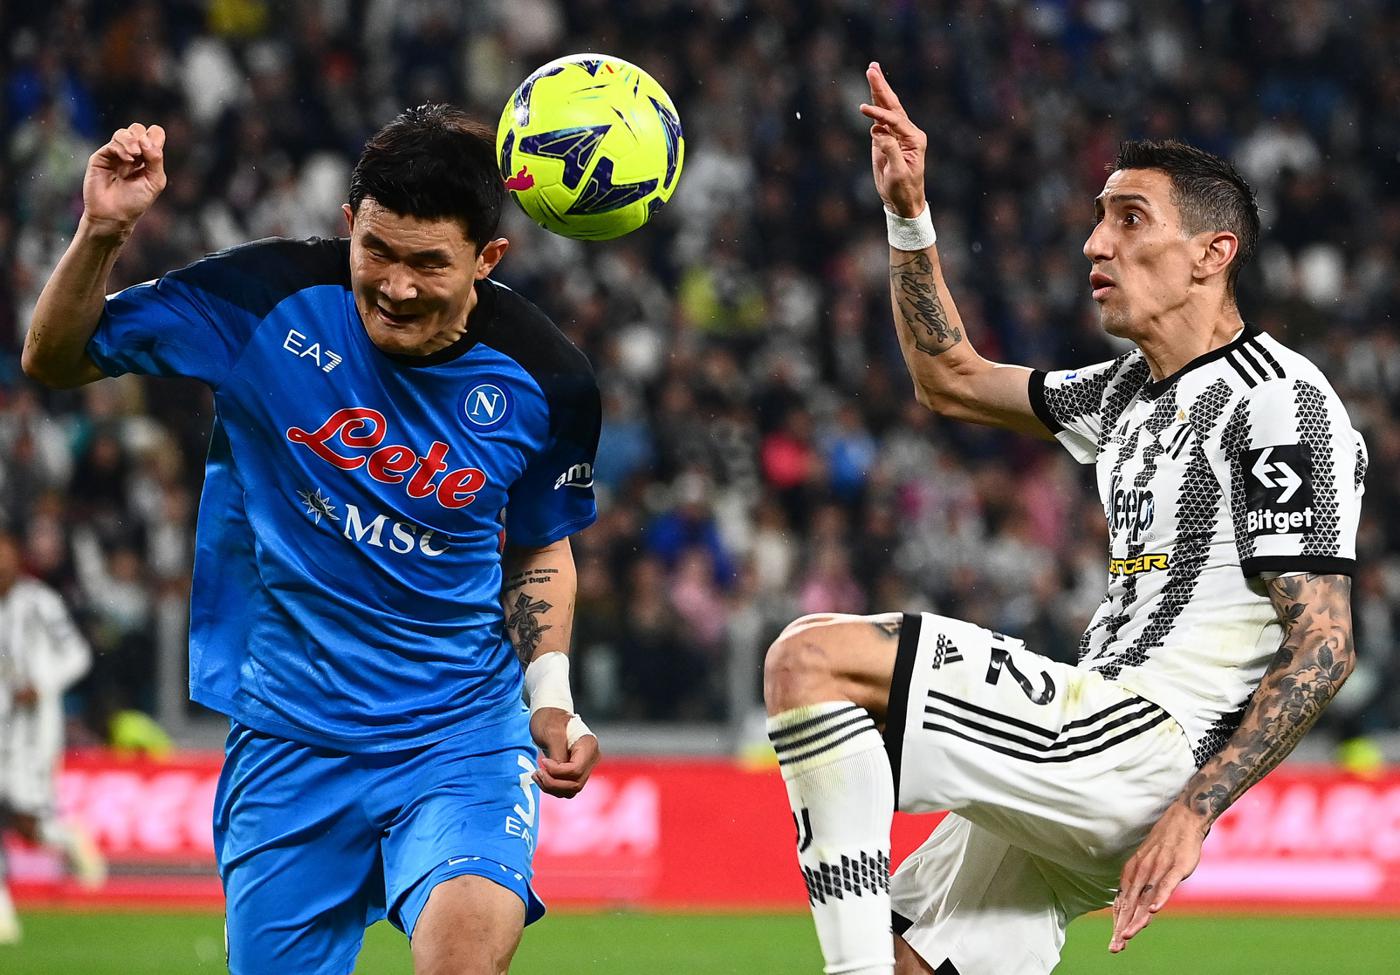 Juventus vs Napoli - 0-1. Italian Championship, round of 31. Match review, statistics